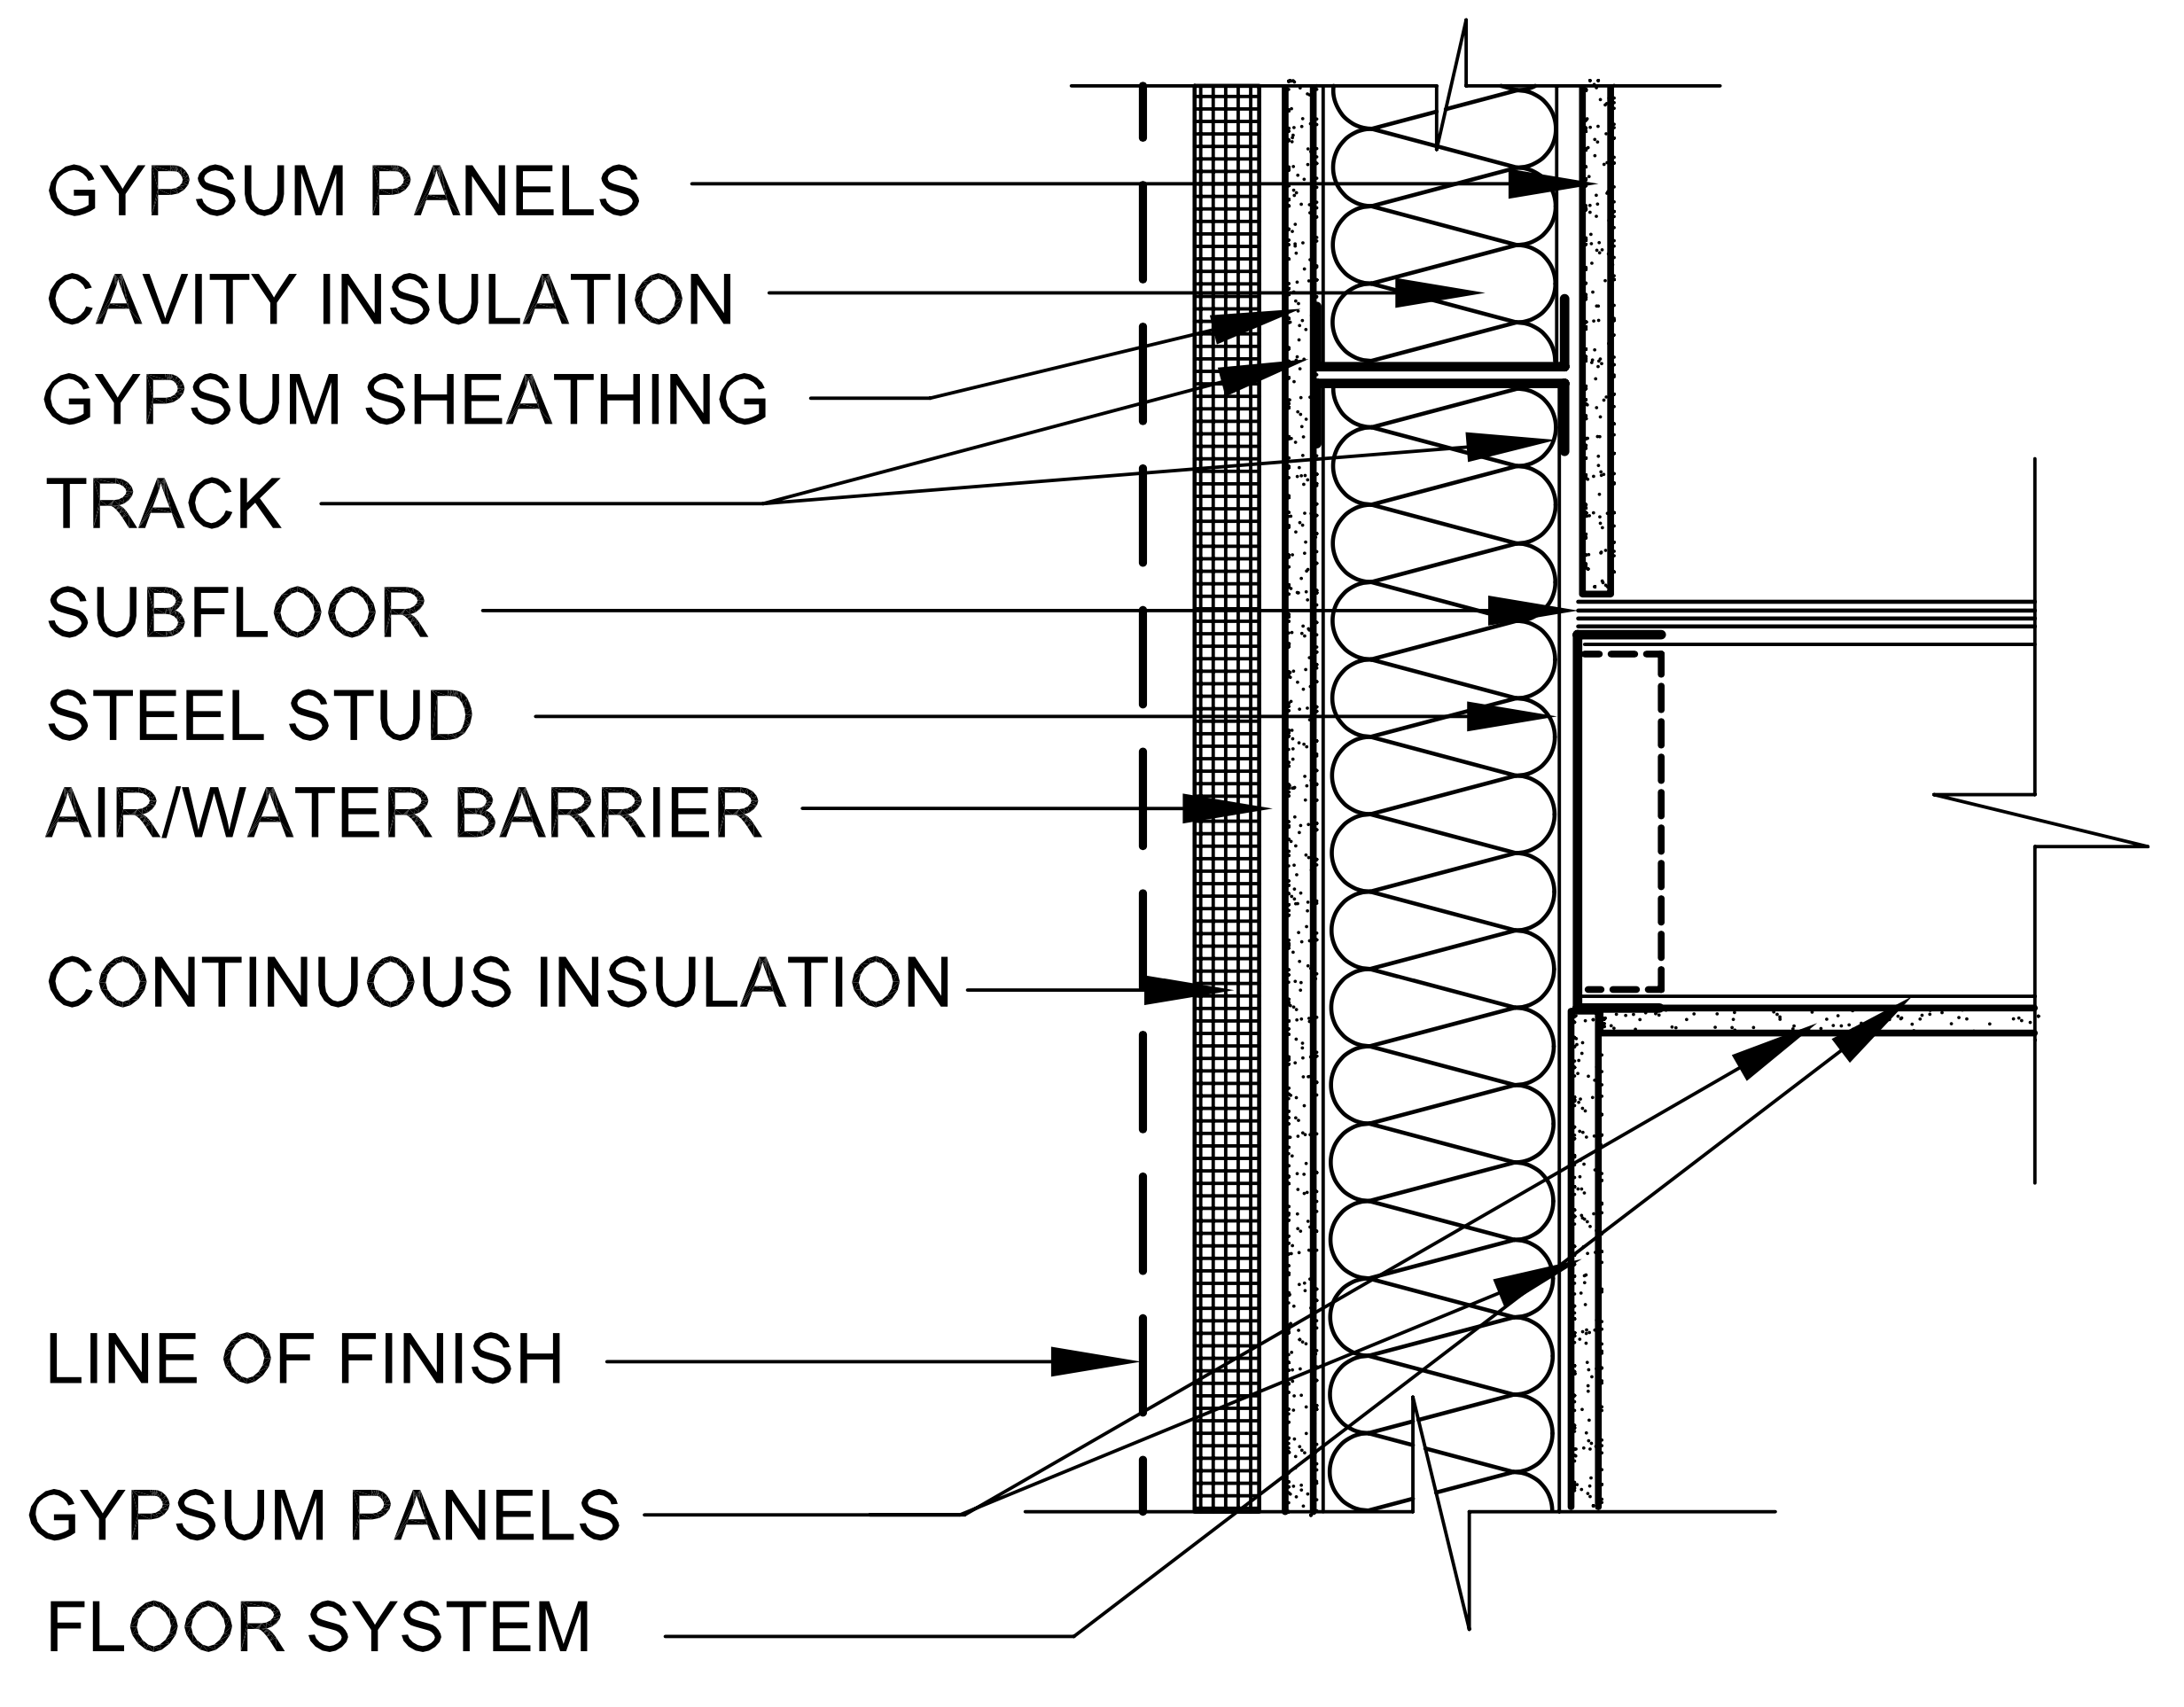 How Do You Insulate a Steel Framed House?